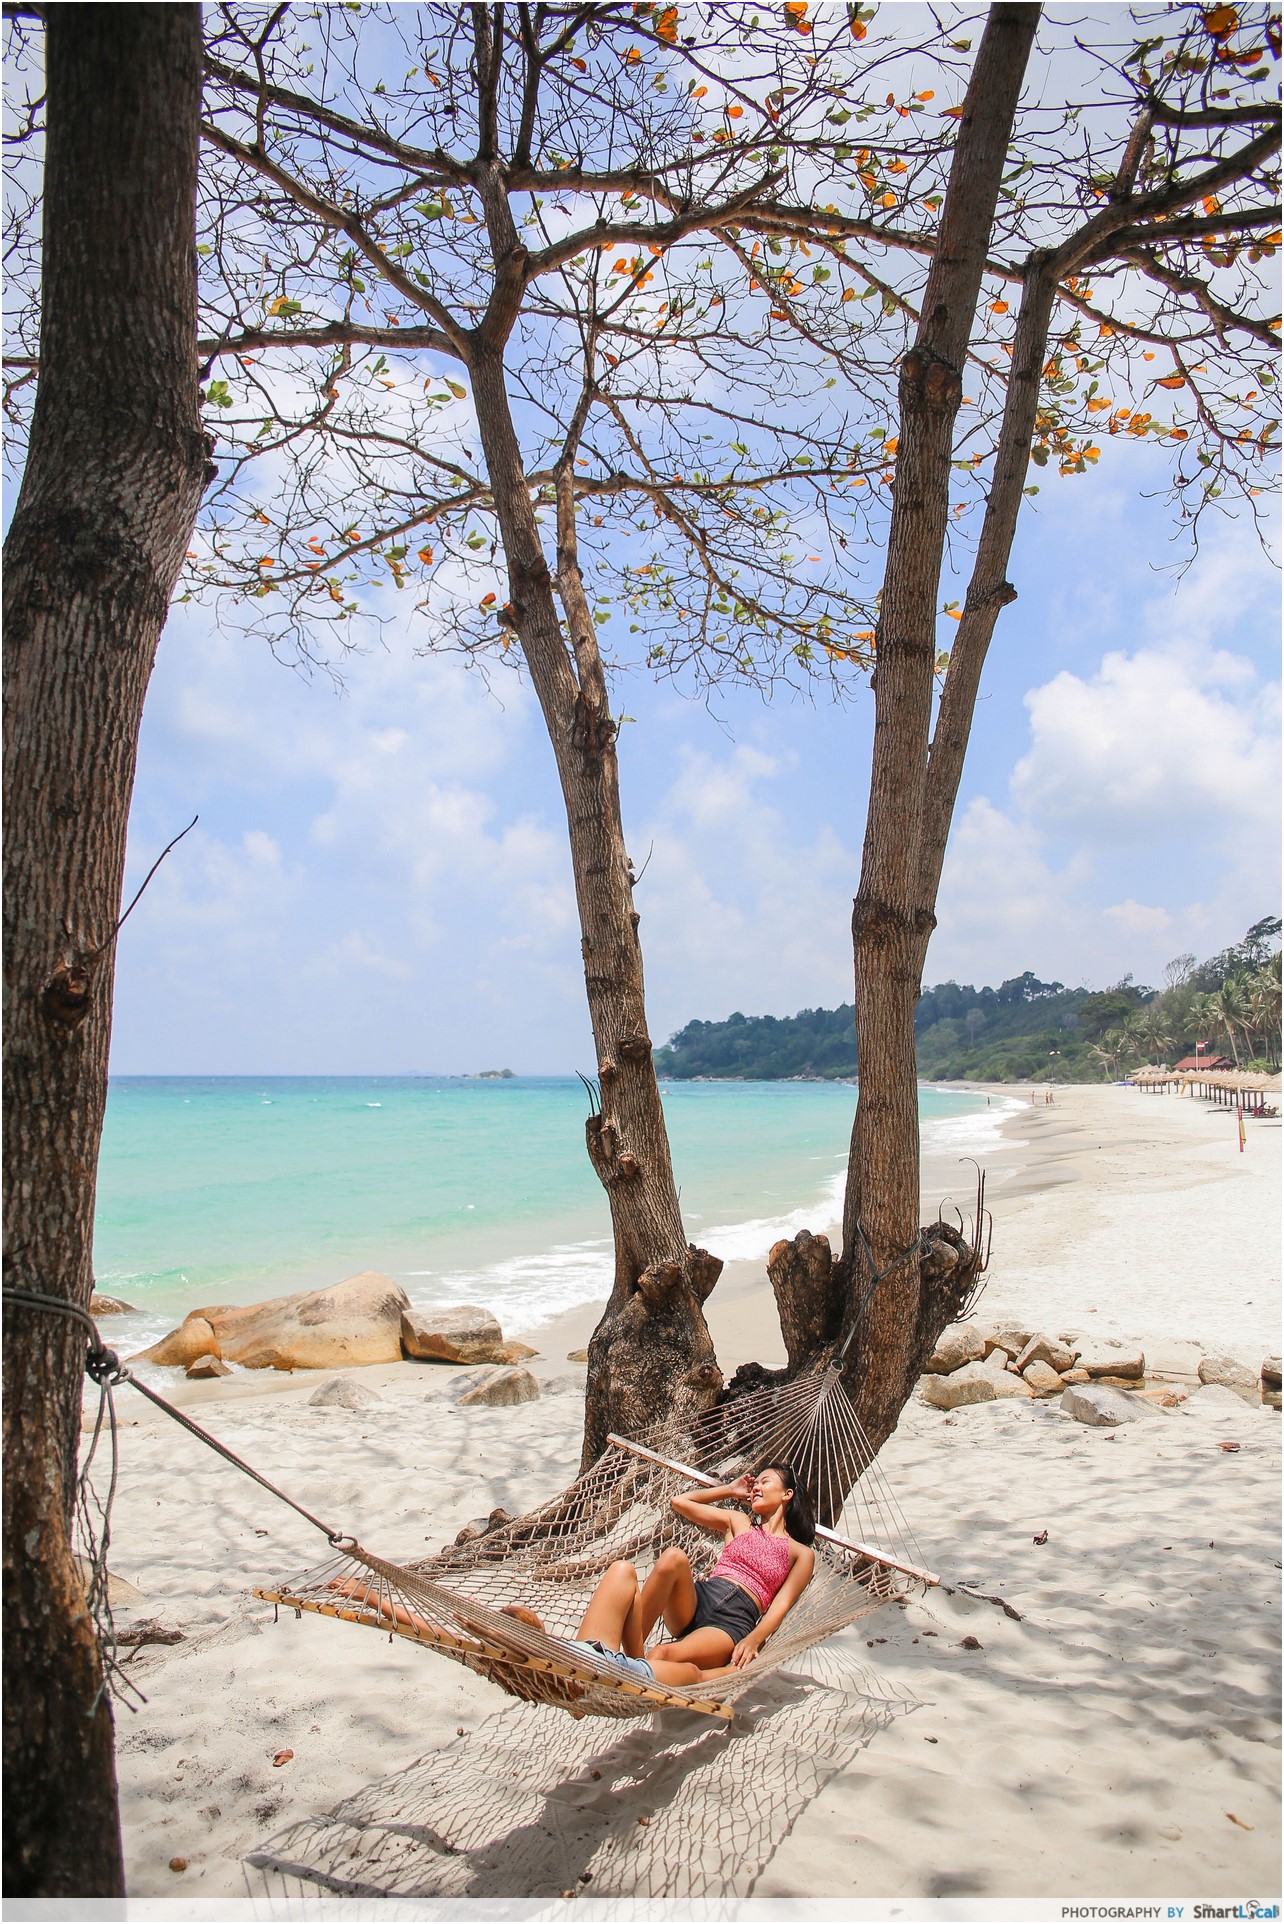 Bintan Resorts - Club Med Bintan hammock